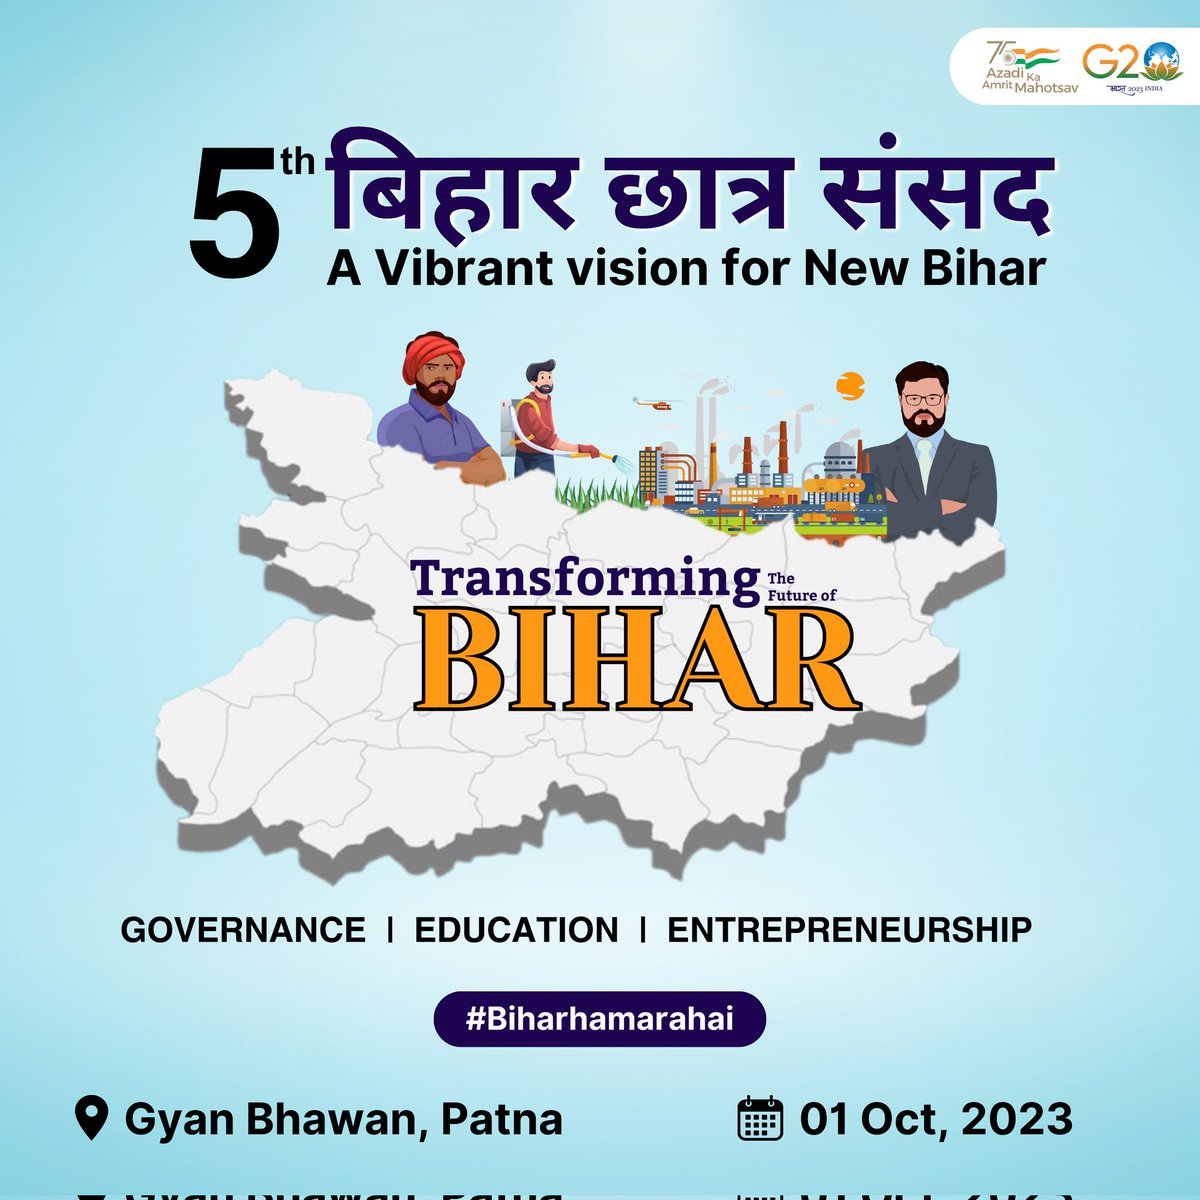 पत्थर-सी हों मांस-पेशियाँ, लोहे-से भुज-दण्ड अभय, नस-नस में हो लहर आग की, तभी जवानी पाती जय। Empowering Bihar's भविष्य, Igniting Change today! Join us to Make a Difference at 5th @Bihar_Sansad on 1st October. #Patna. #BiharHamaraHai #Bihar #BiharChhatraSansad #Youth_In_Leadership